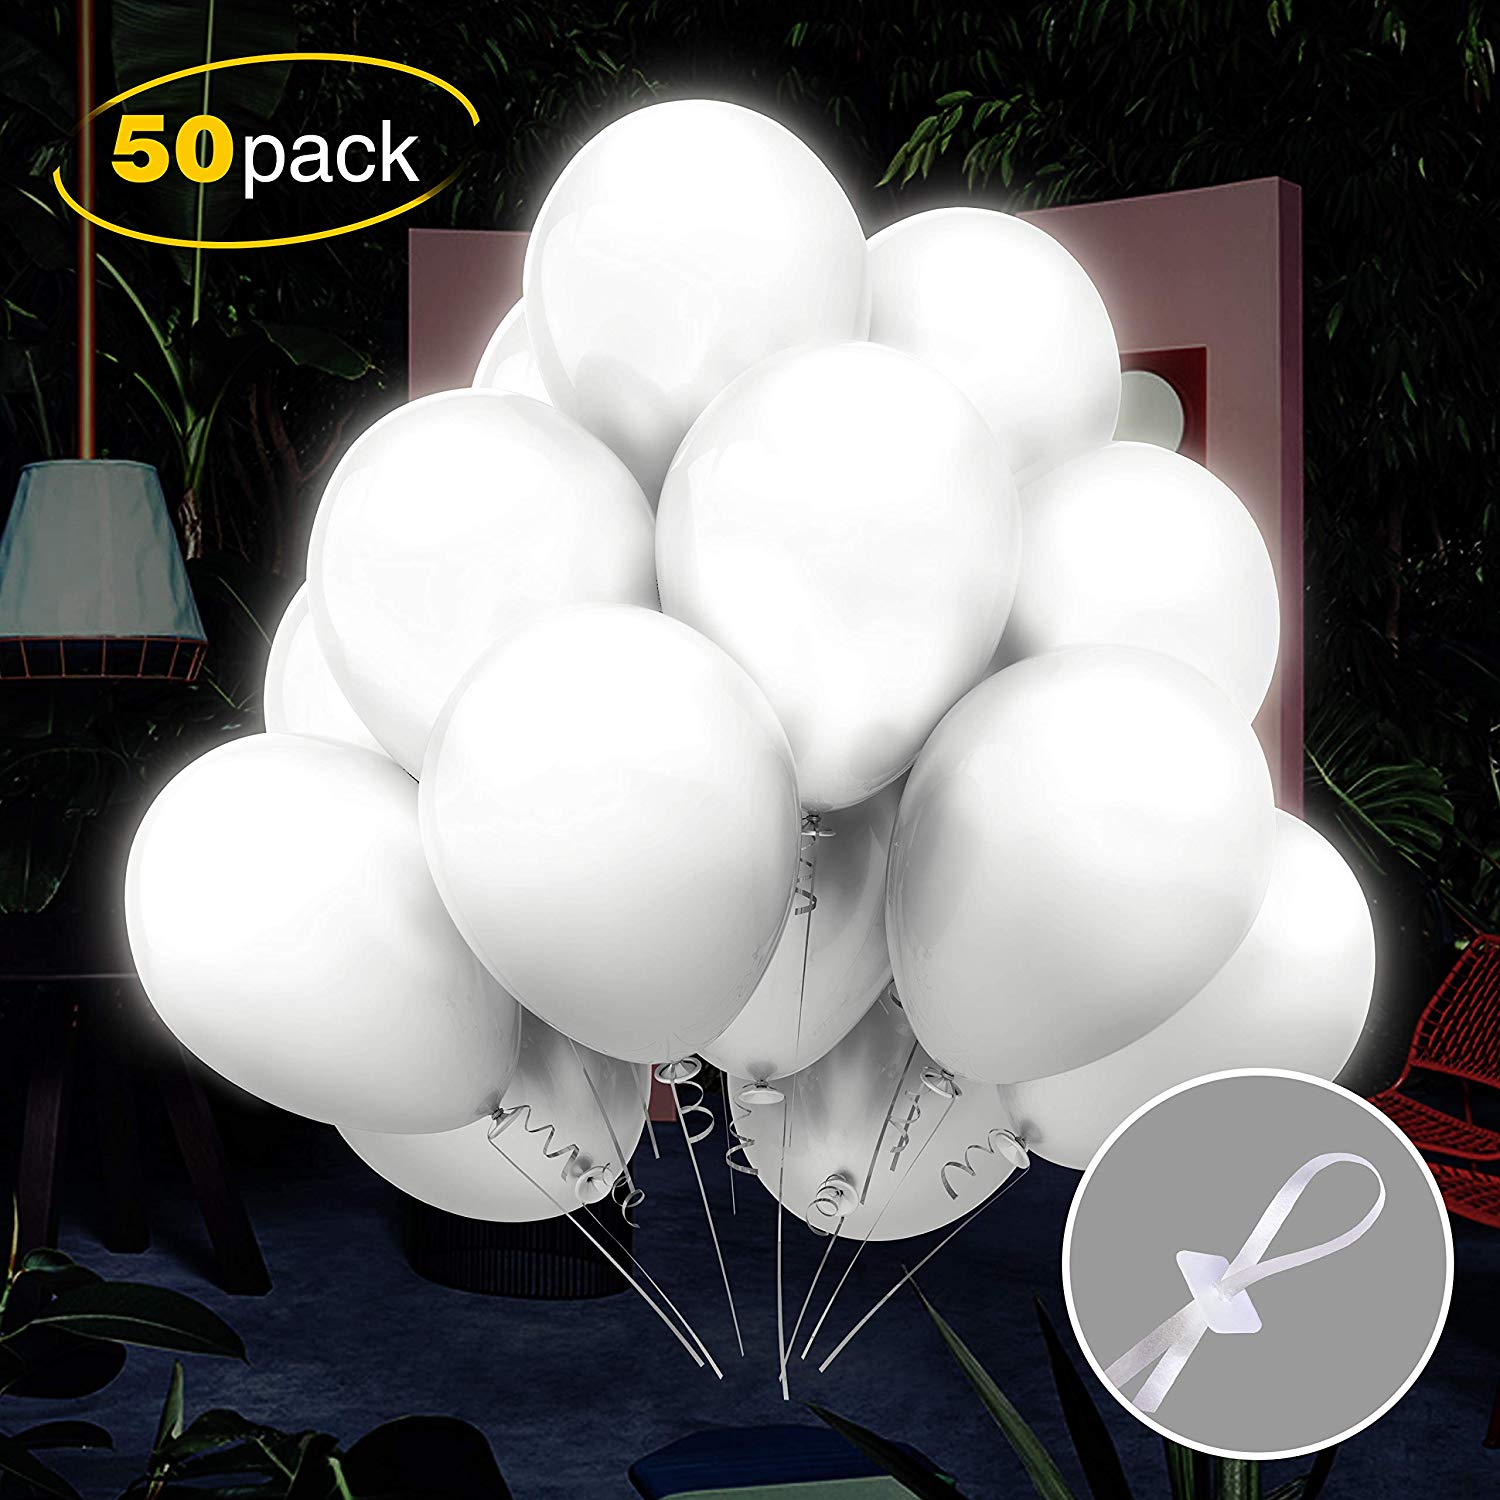 6 Stück Helium Balloon LED Perlen Gas Leucht Luftballon Weiss Weihnachten Party